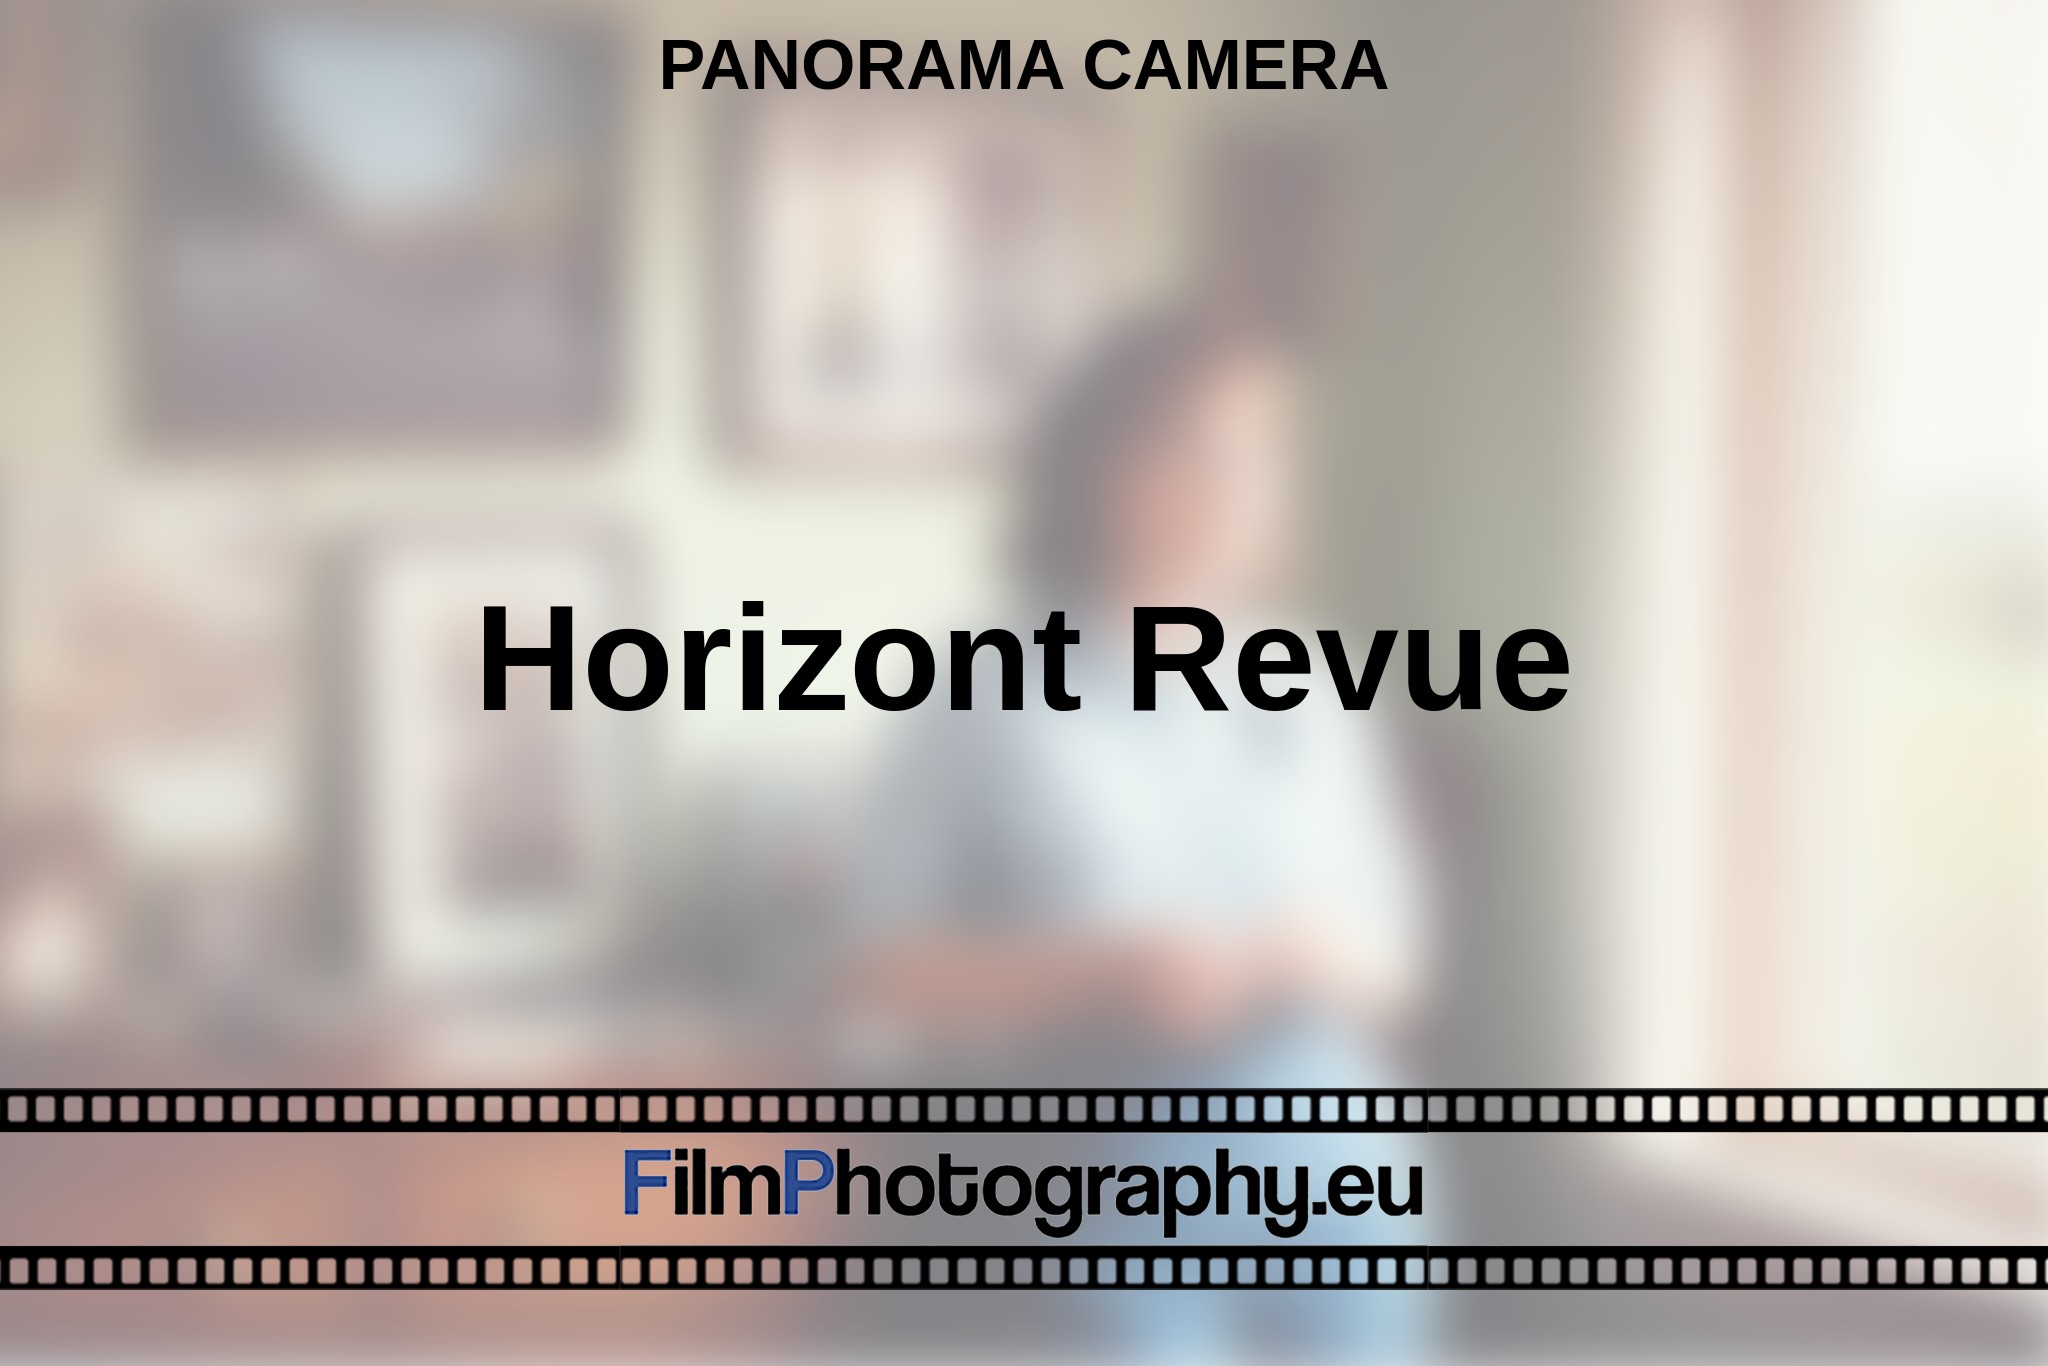 horizont-revue-panorama-camera-en-bnv.jpg